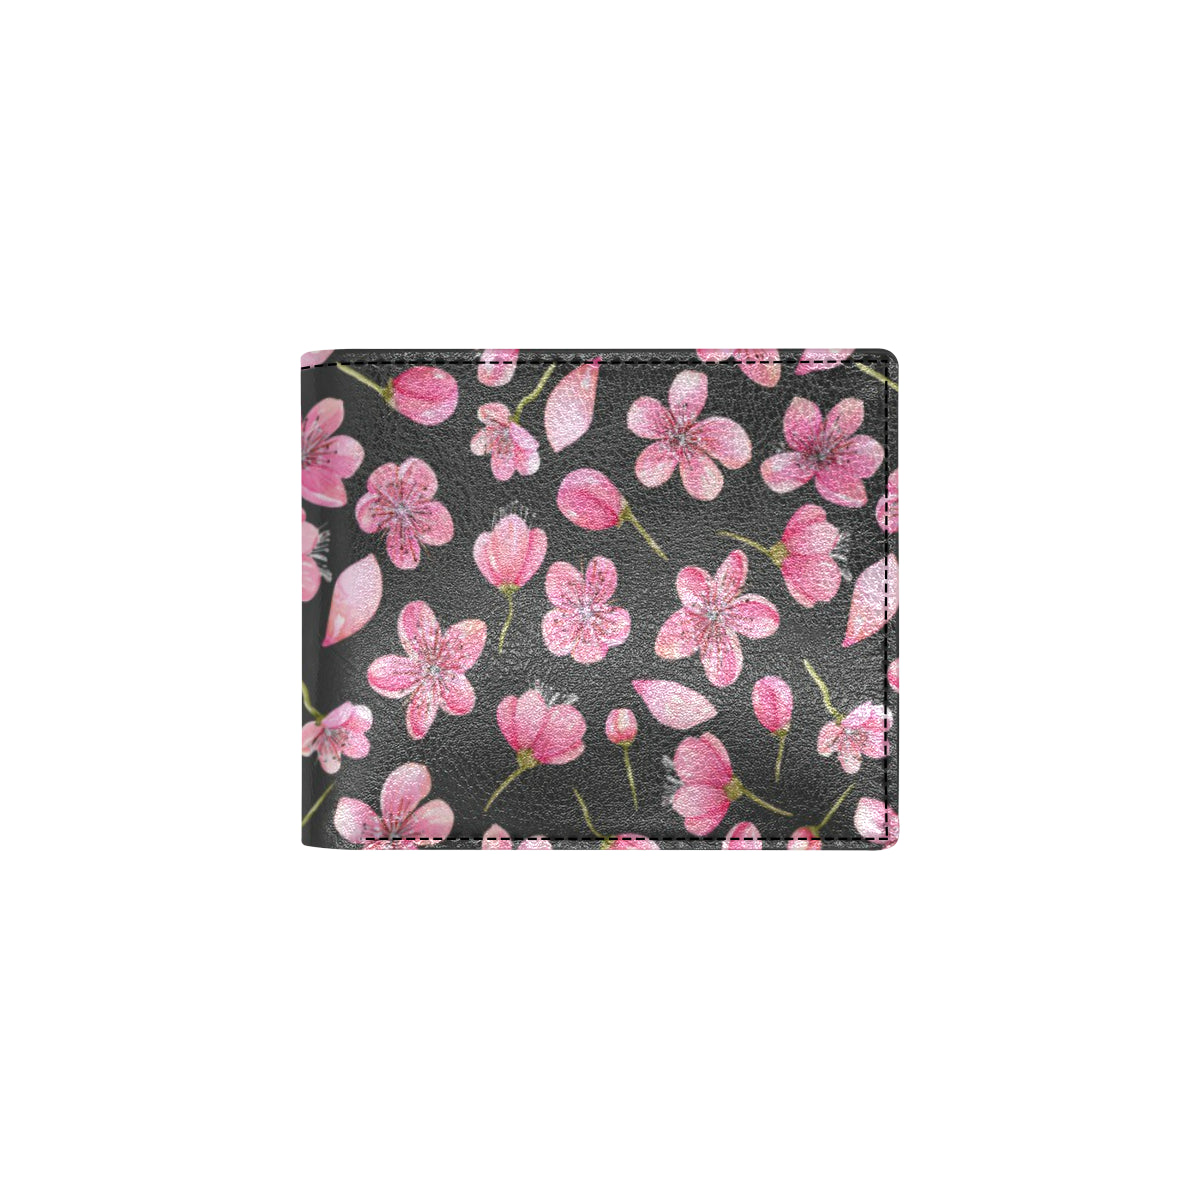 Apple blossom Pattern Print Design AB03 Men's ID Card Wallet